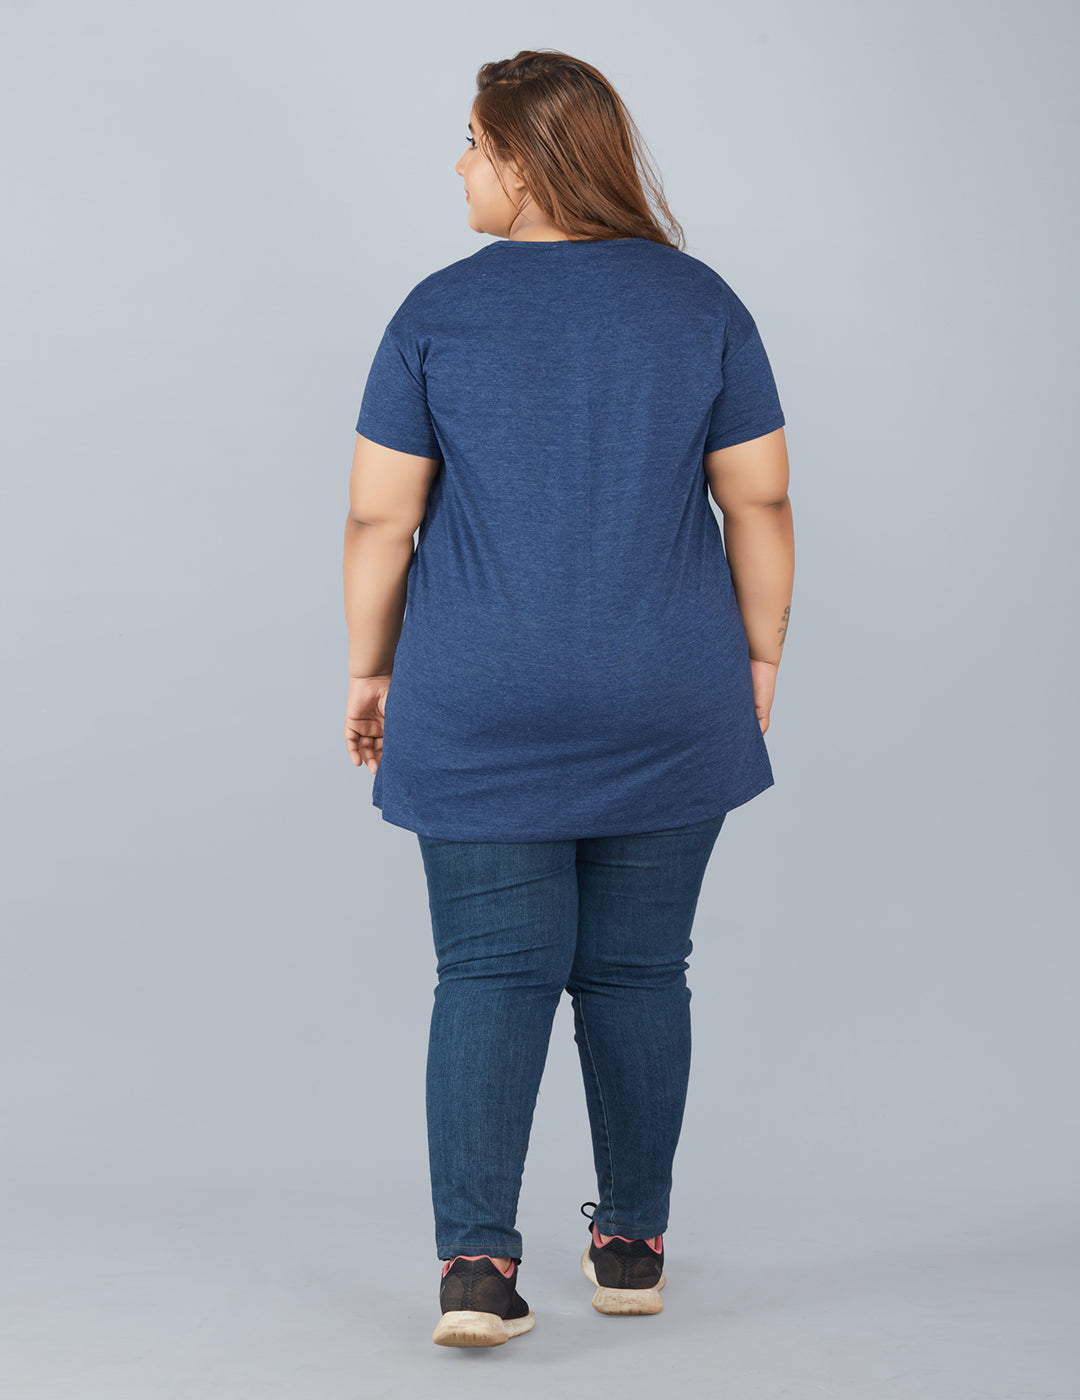 Plus Size Plain Cotton T-Shirt For Women - Mix Navy At Best Prices